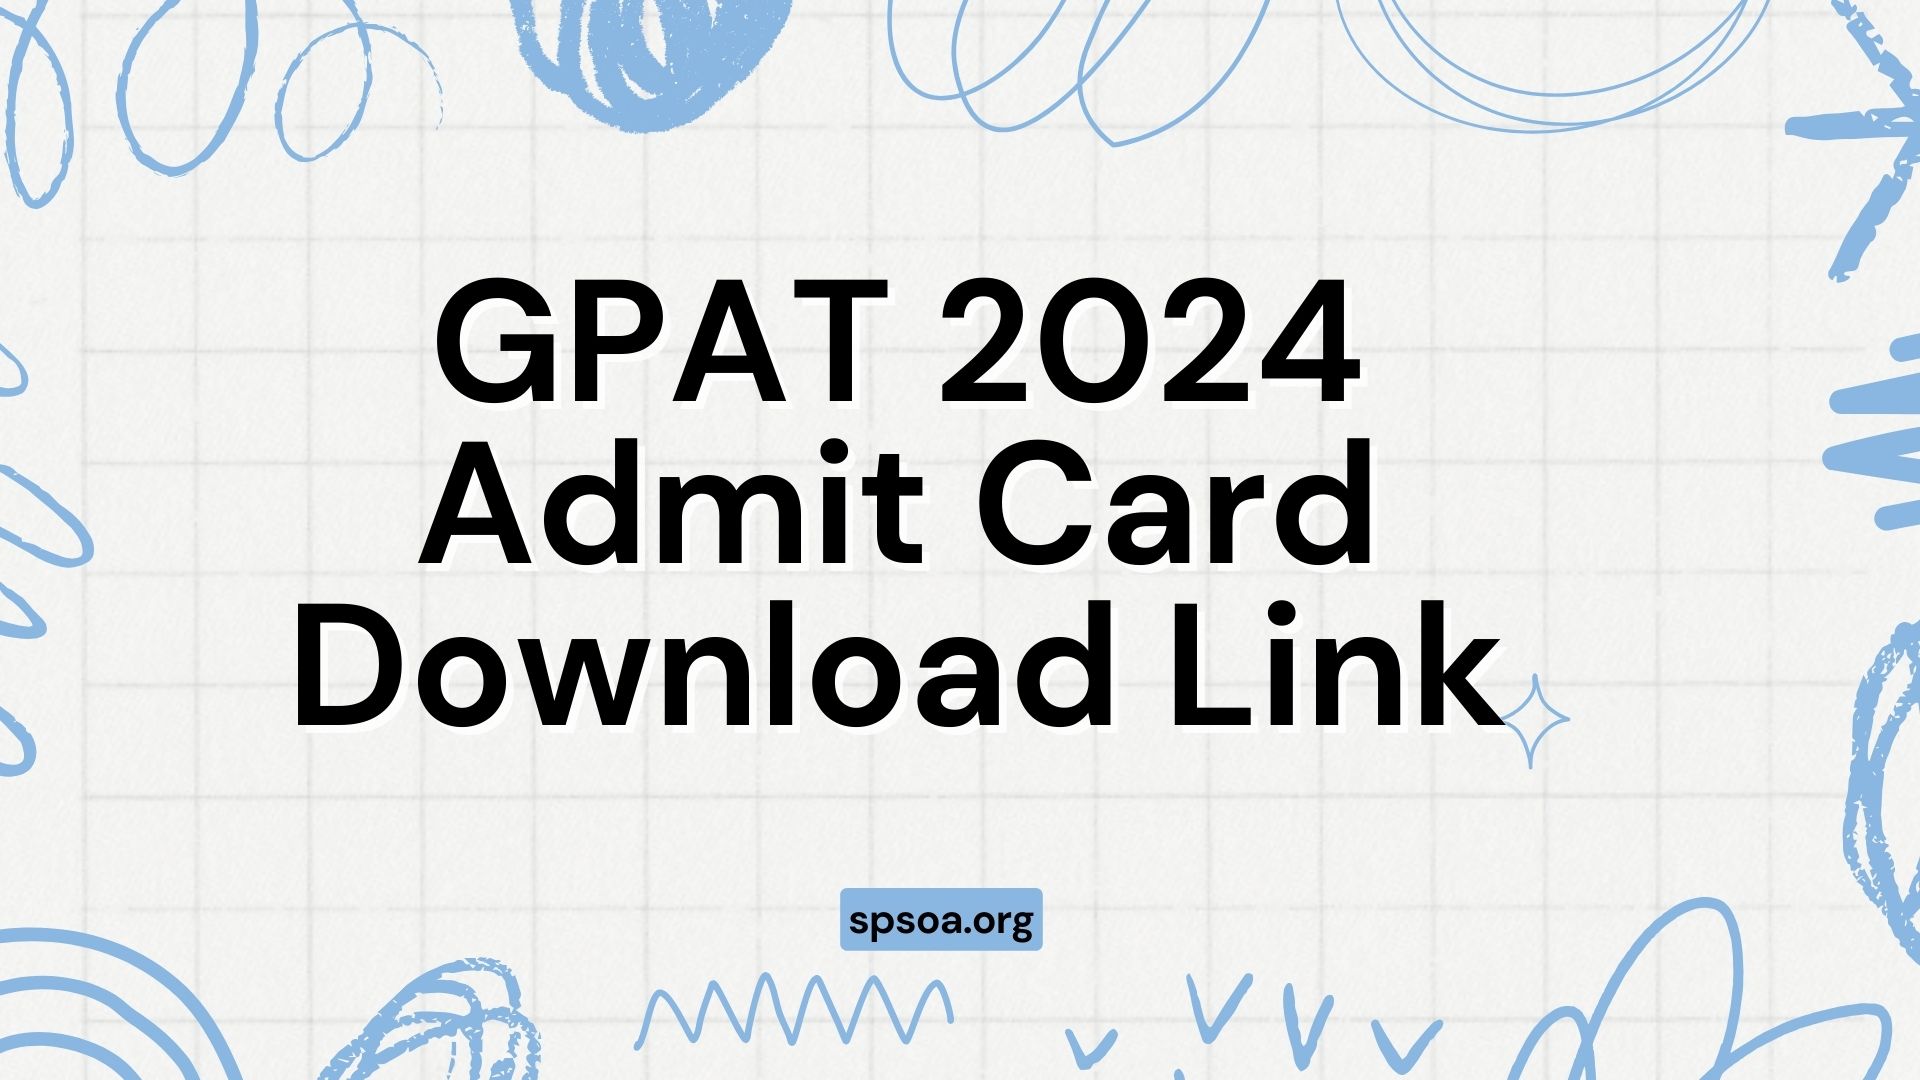 GPAT 2024 Admit Card Download Link